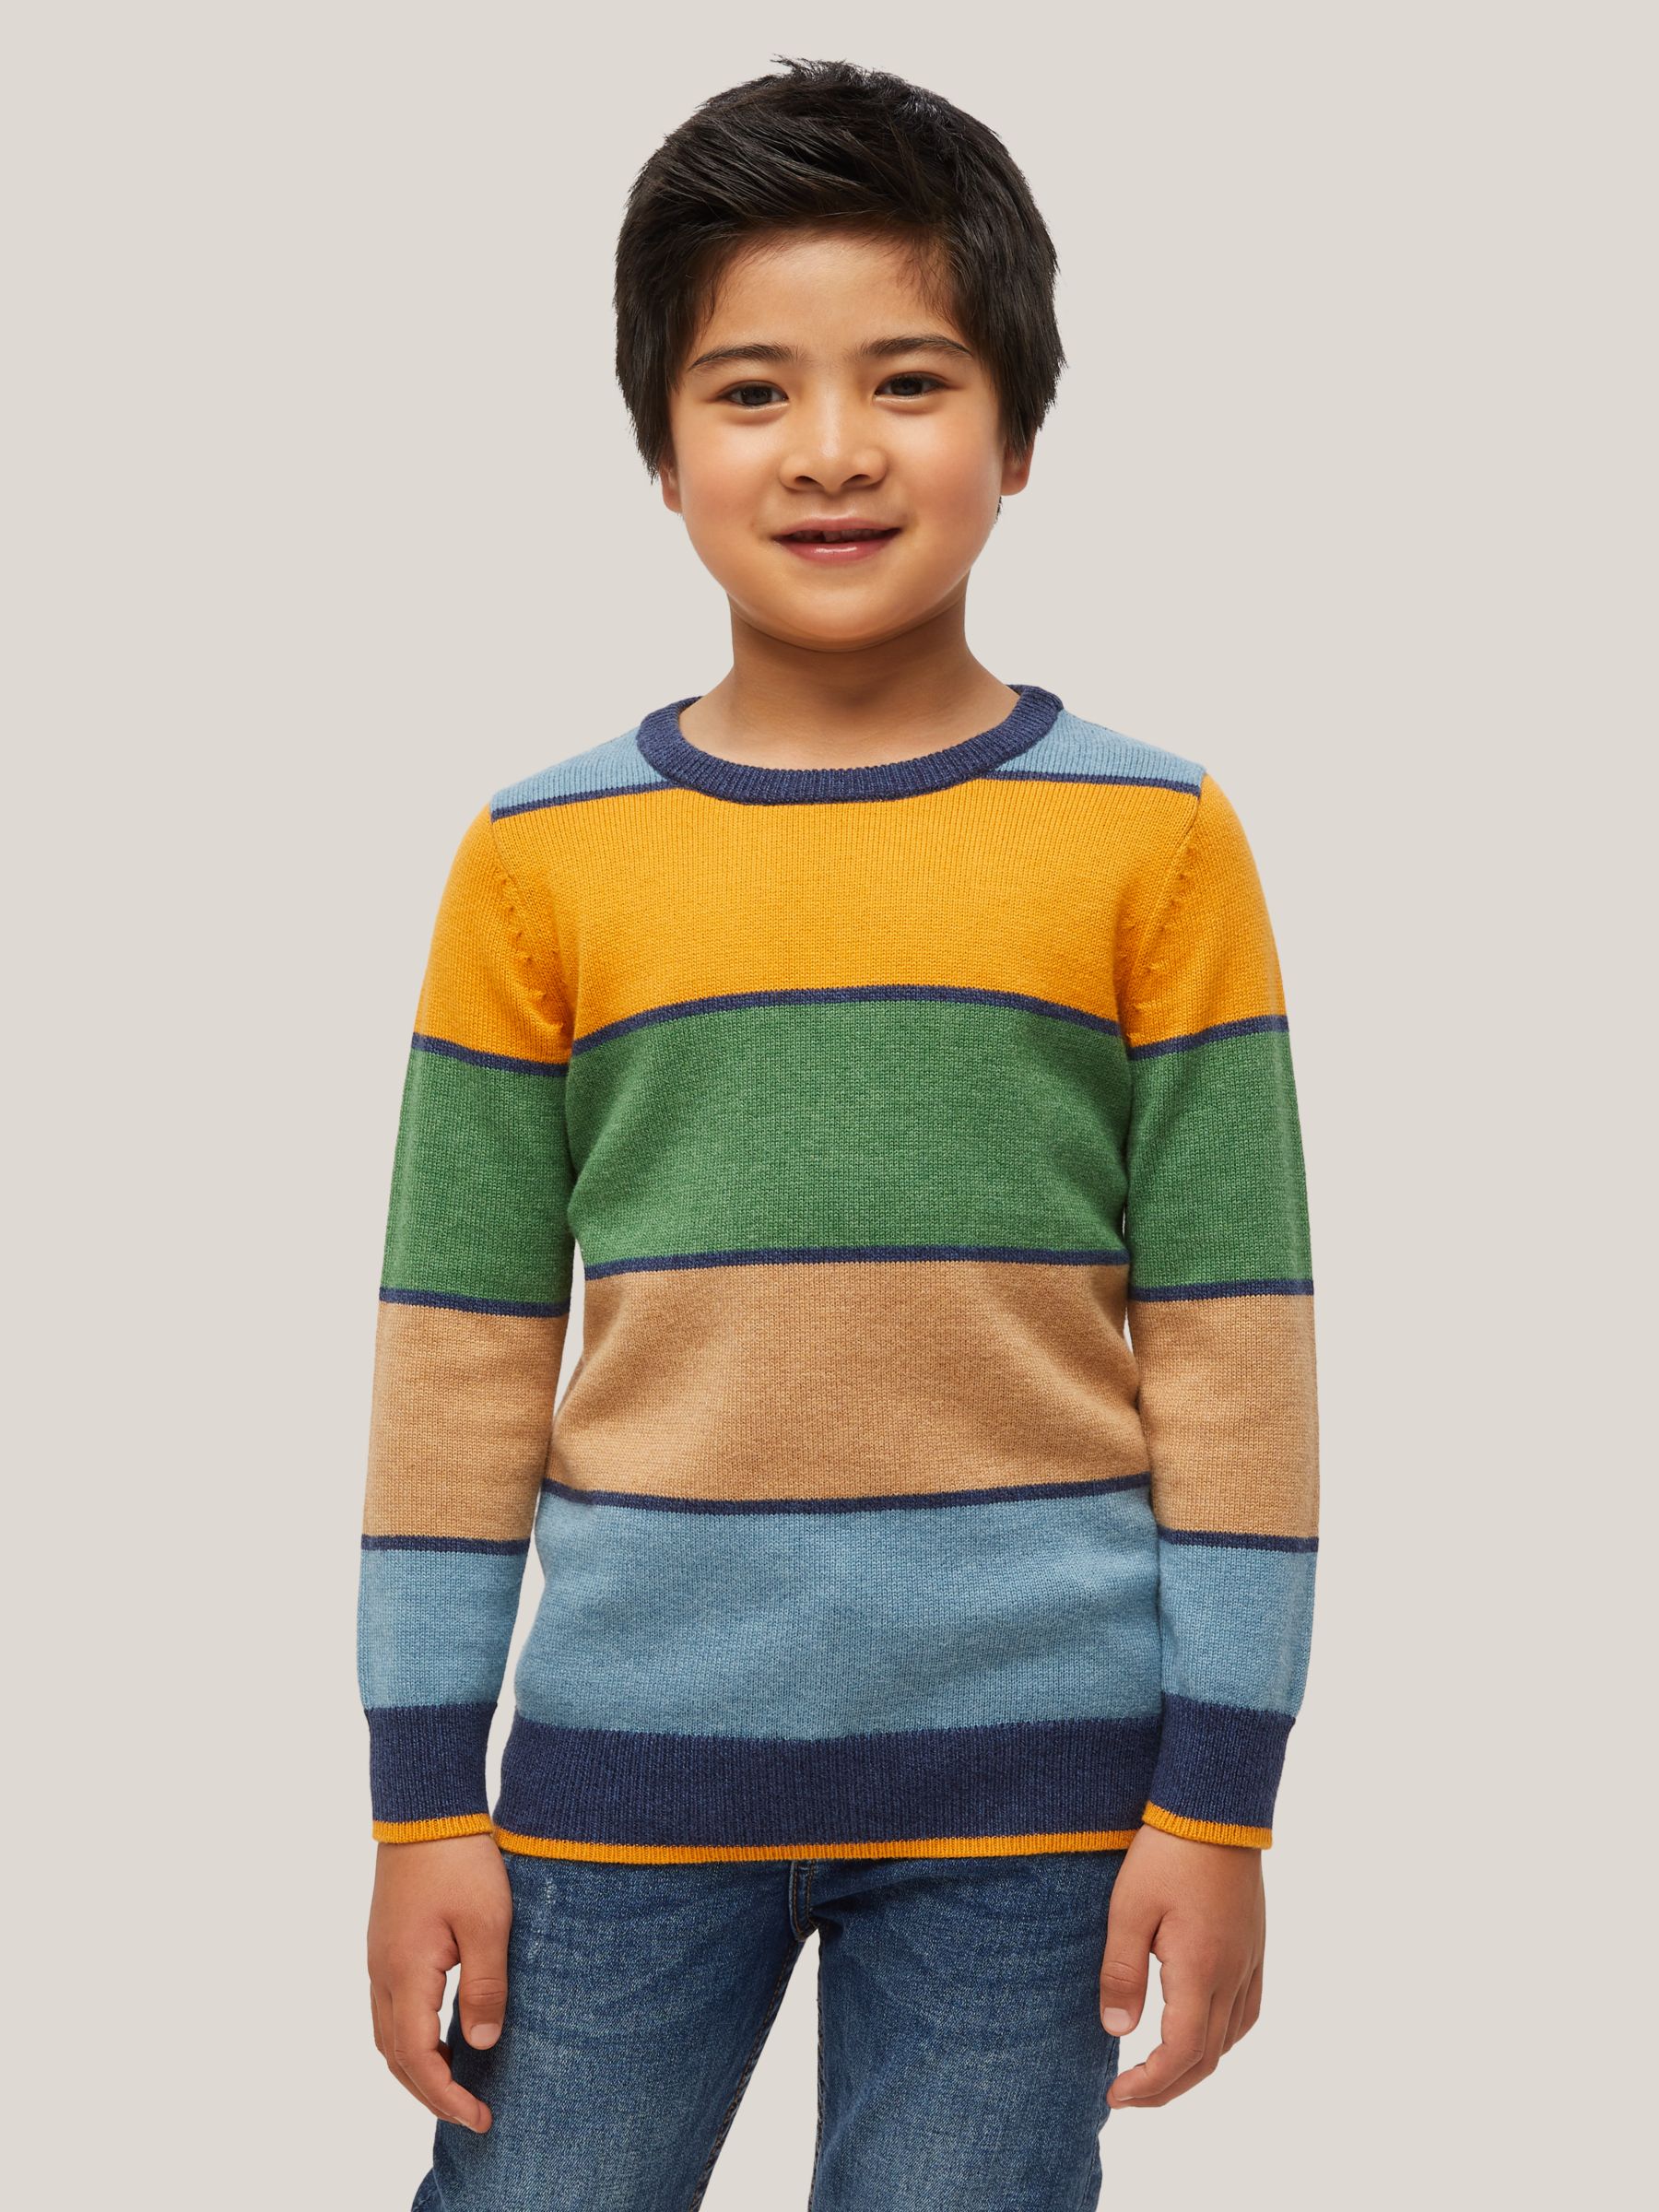 John Lewis Kids' Cotton Cashmere Striped Knit Jumper, Multi